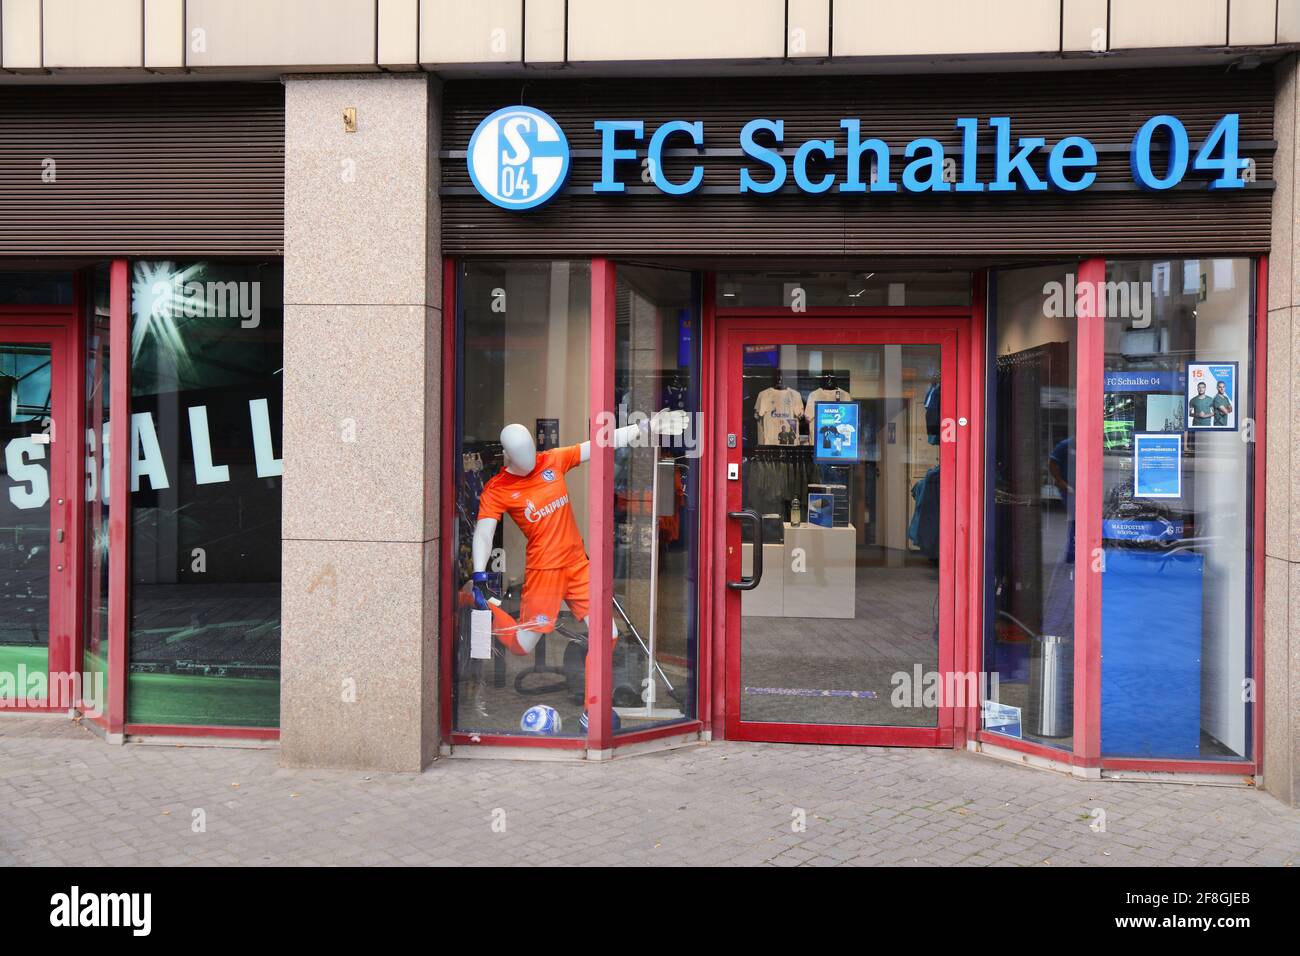 GELSENKIRCHEN, GERMANY - SEPTEMBER 17, 2020: FC Schalke 04 official sports team merchandise store in Gelsenkirchen, Germany. FC Schalke 04 is a profes Stock Photo